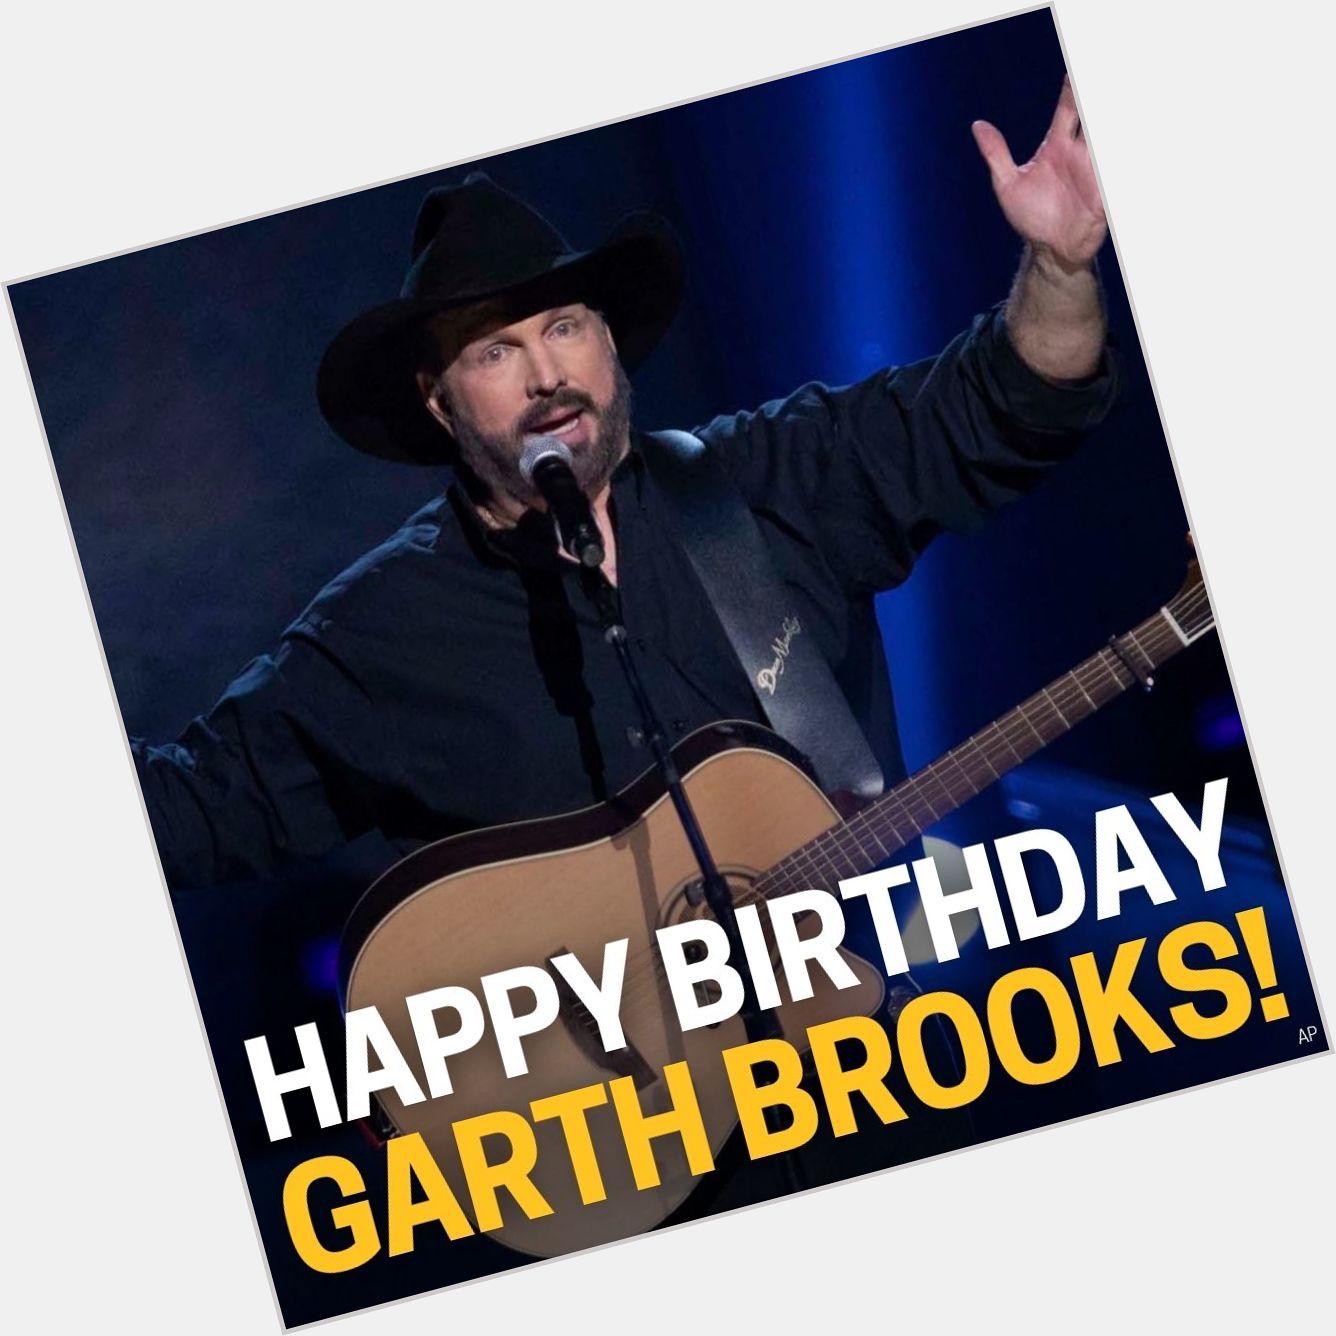 Happy birthday Garth Brooks! 